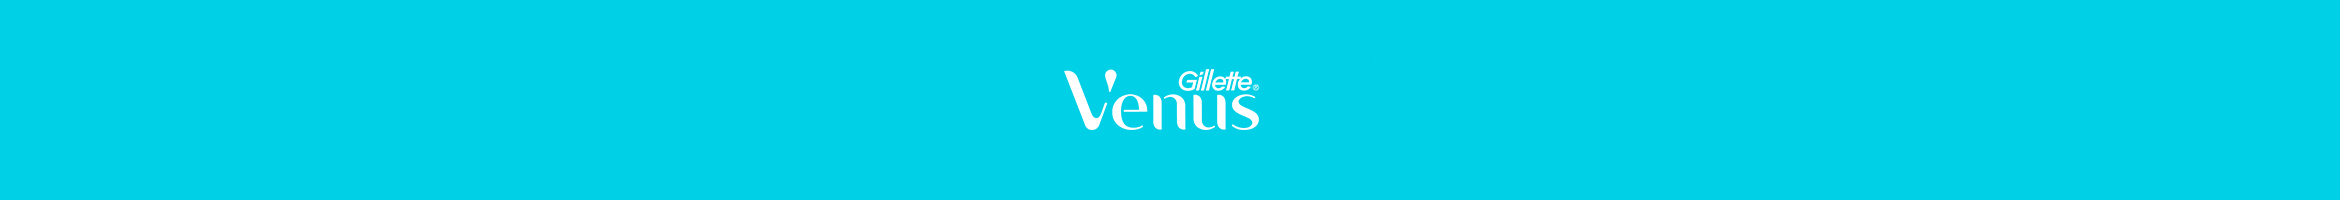 Gillette Venus bei Müller